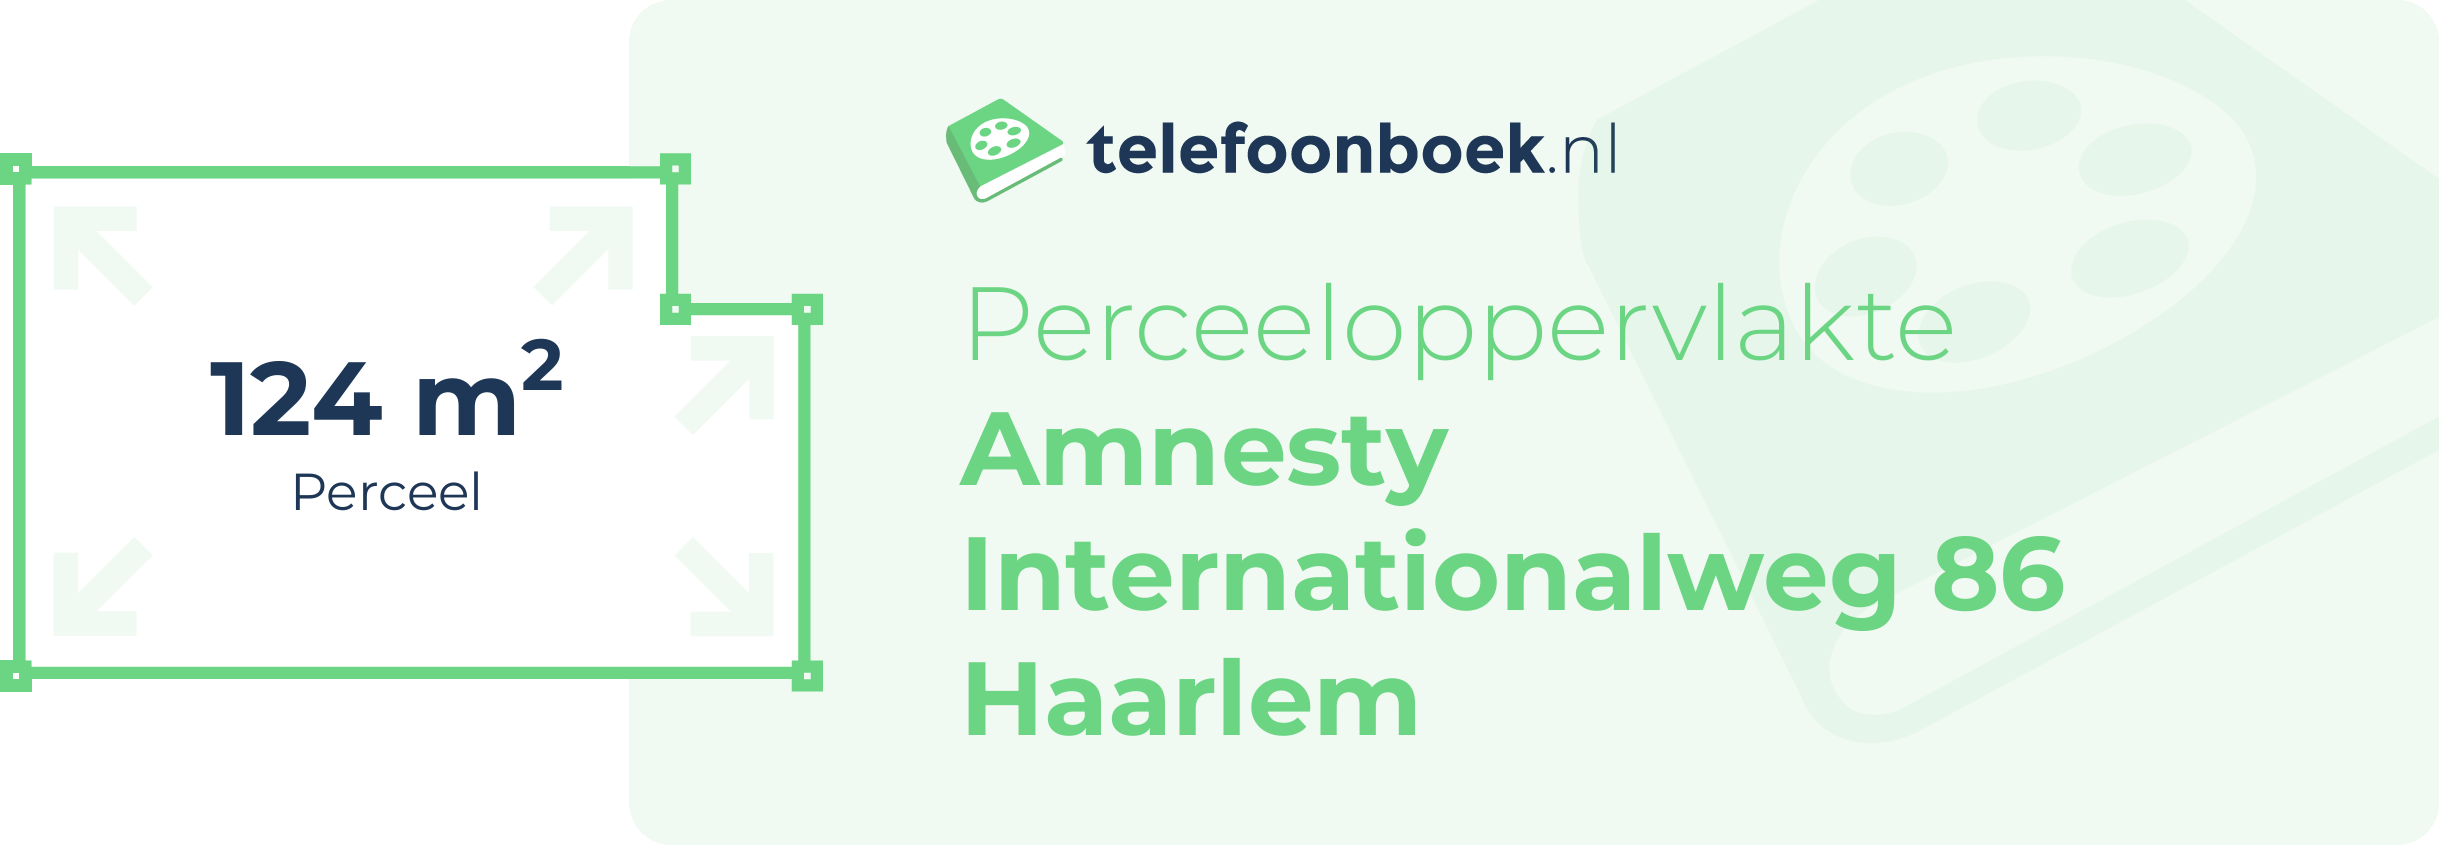 Perceeloppervlakte Amnesty Internationalweg 86 Haarlem